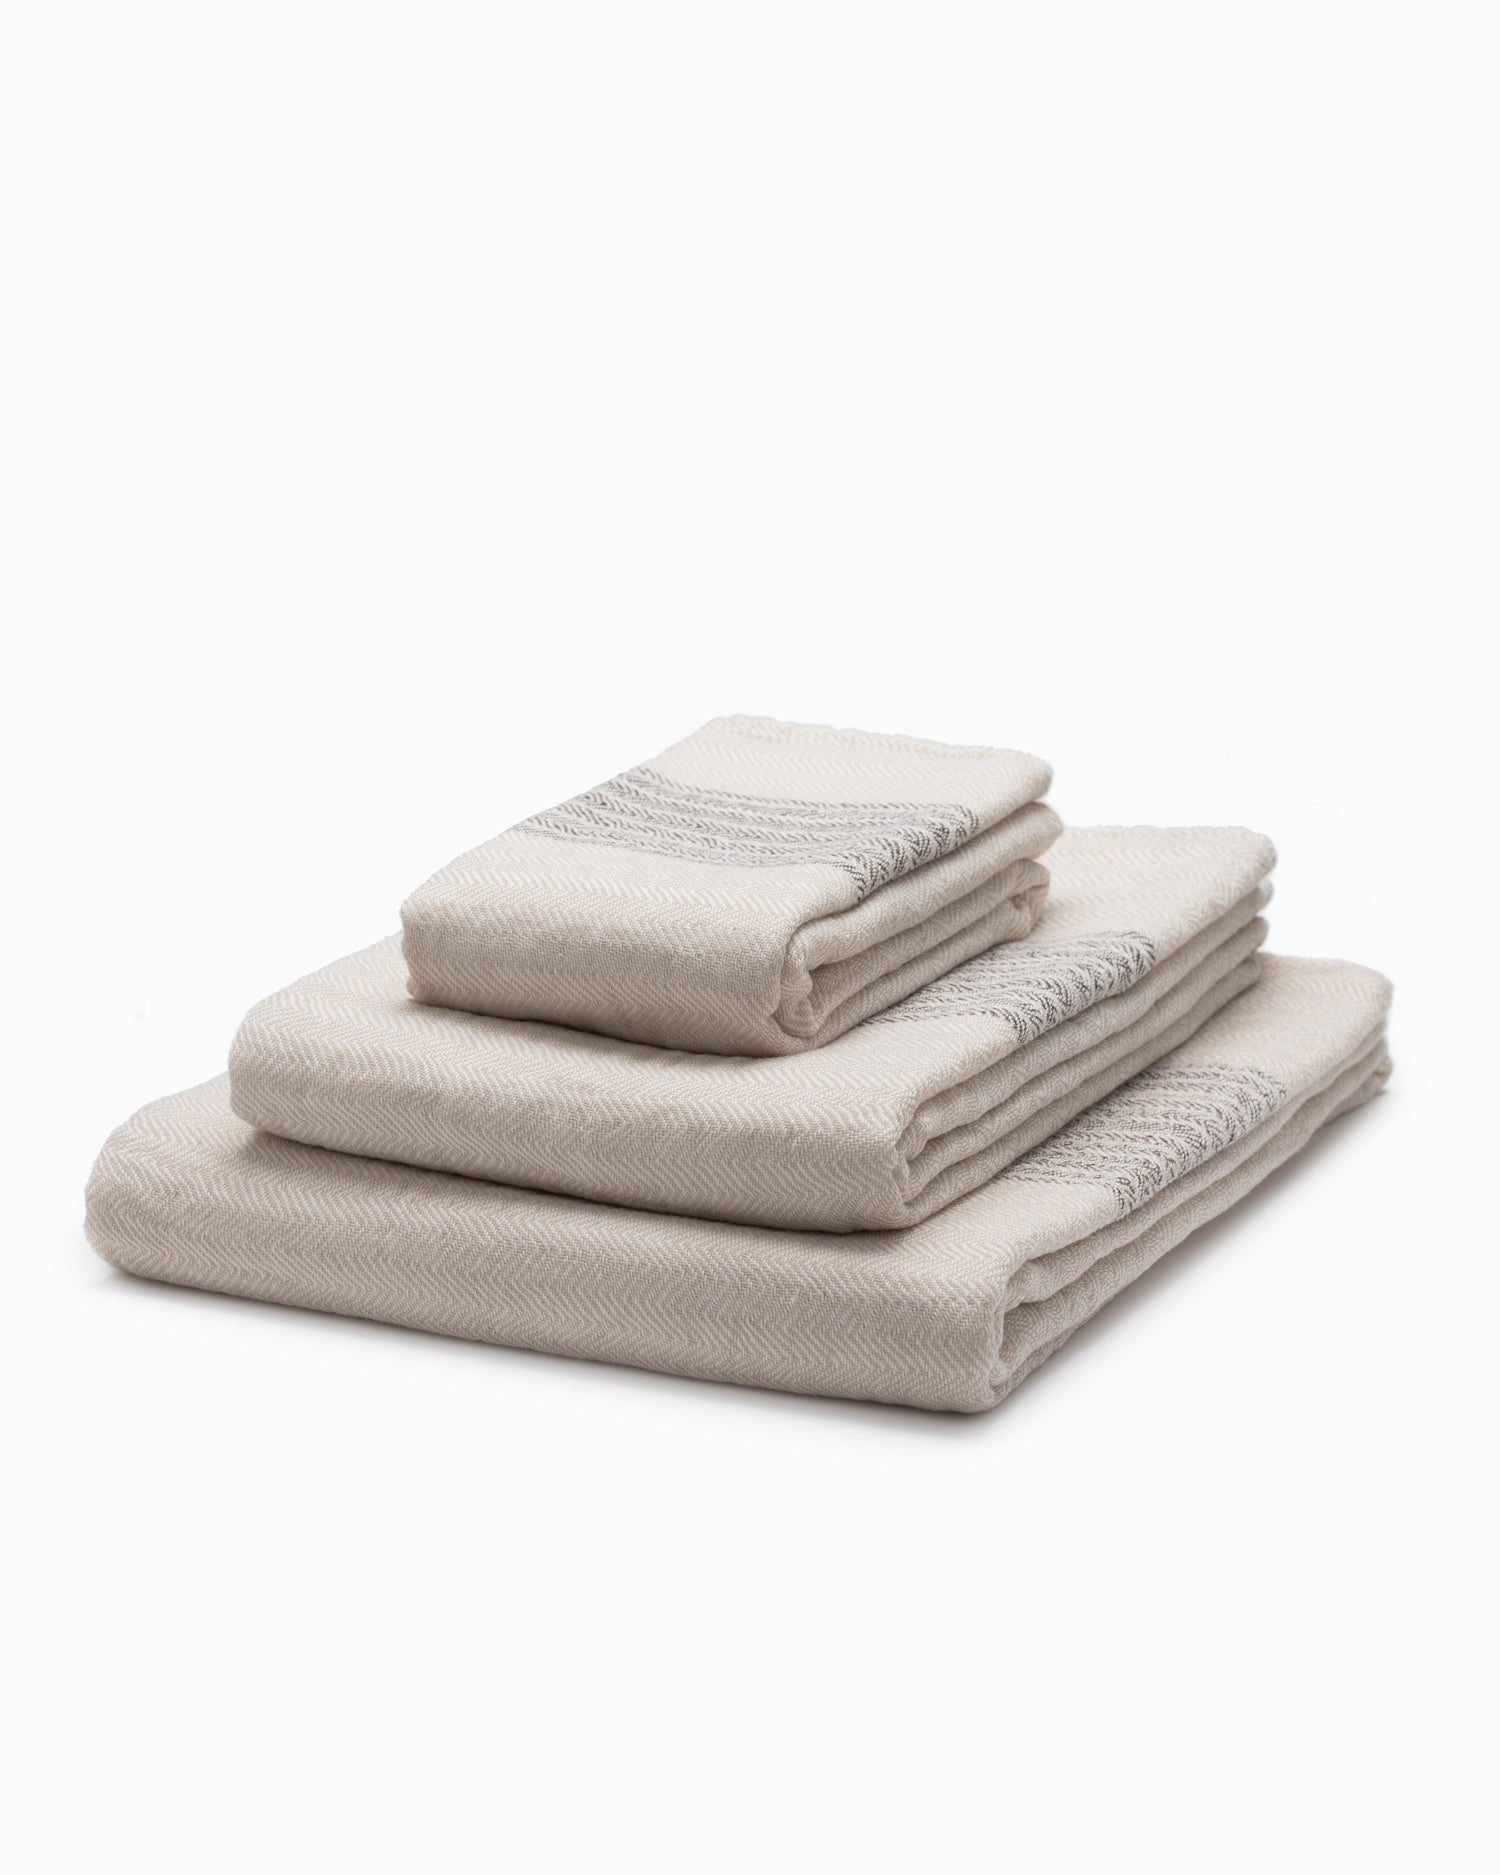 Flax Line Organic Hand Towel - Beige